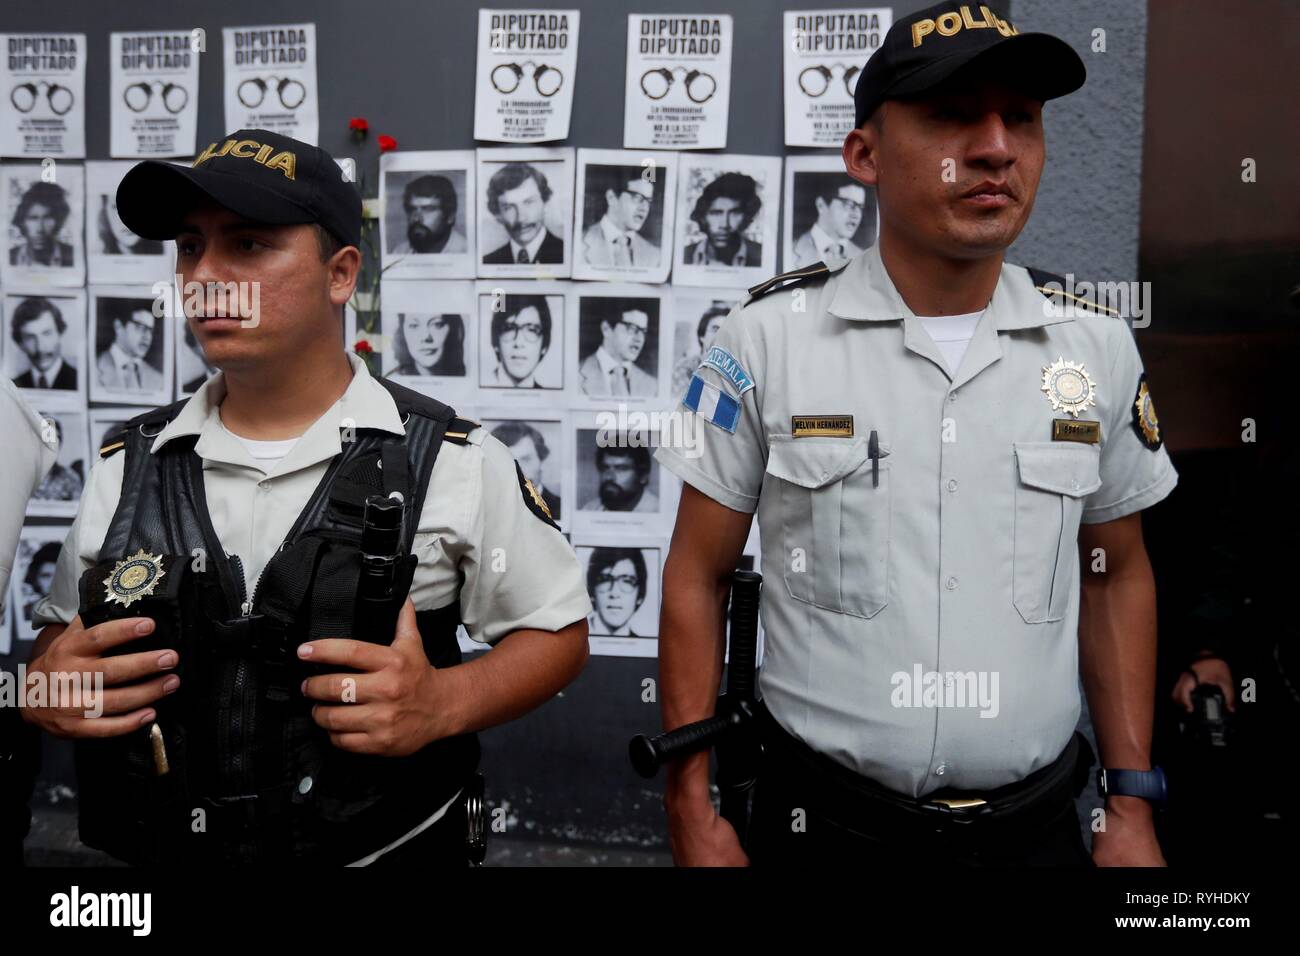 Ciudad De Guatemala, Guatemala. 14th Mar, 2019. Police members ...